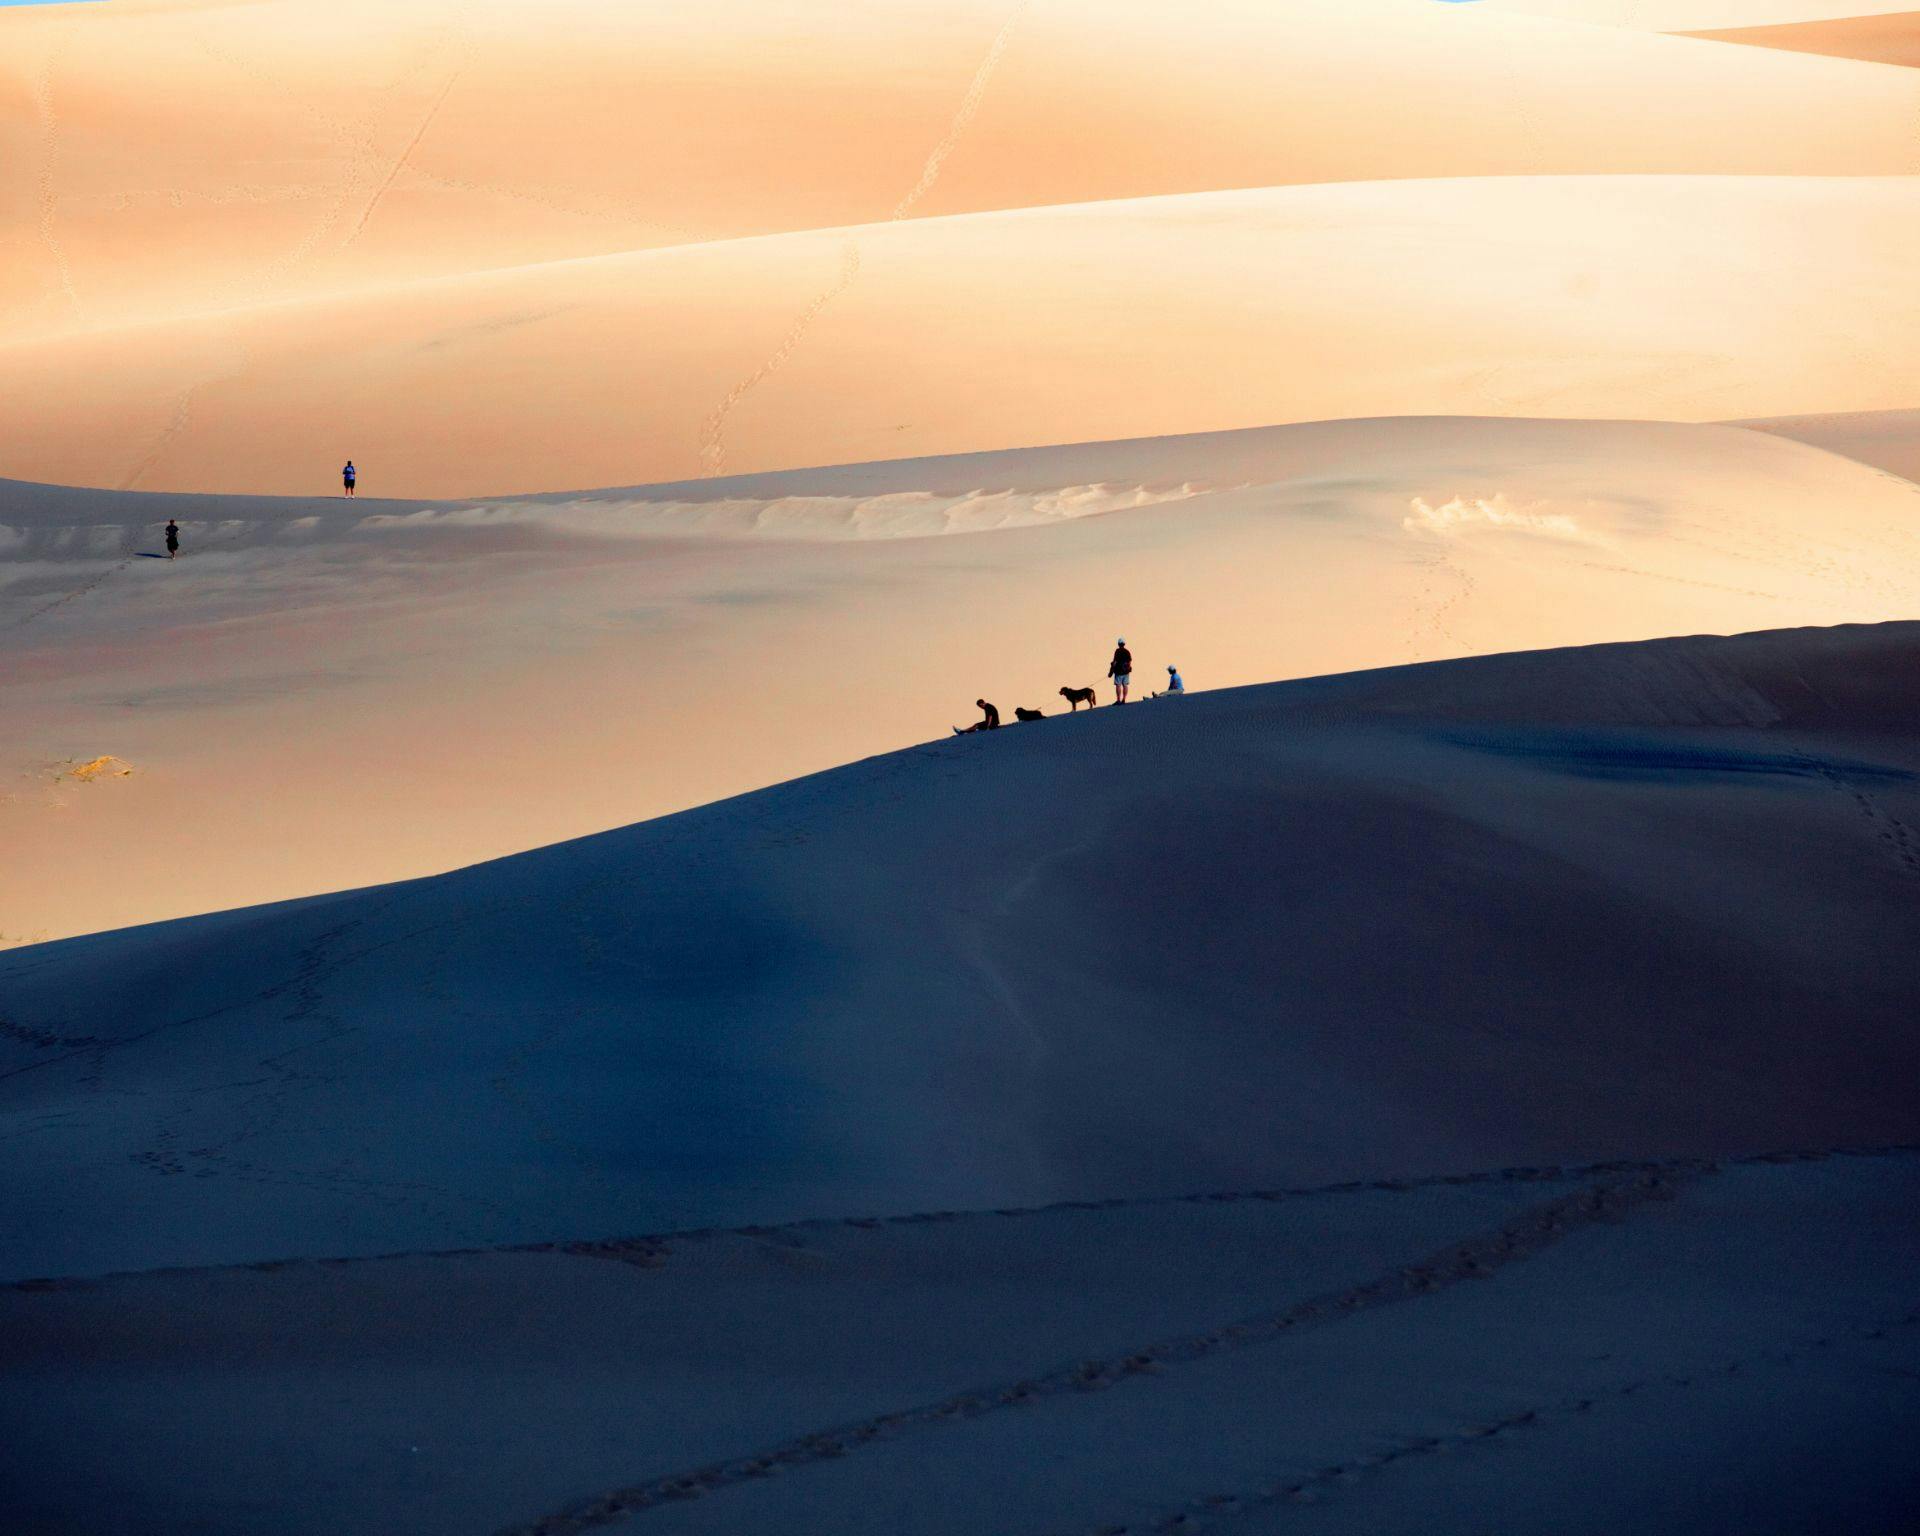 Sandboarding at the Great Sand Dunes National Park.